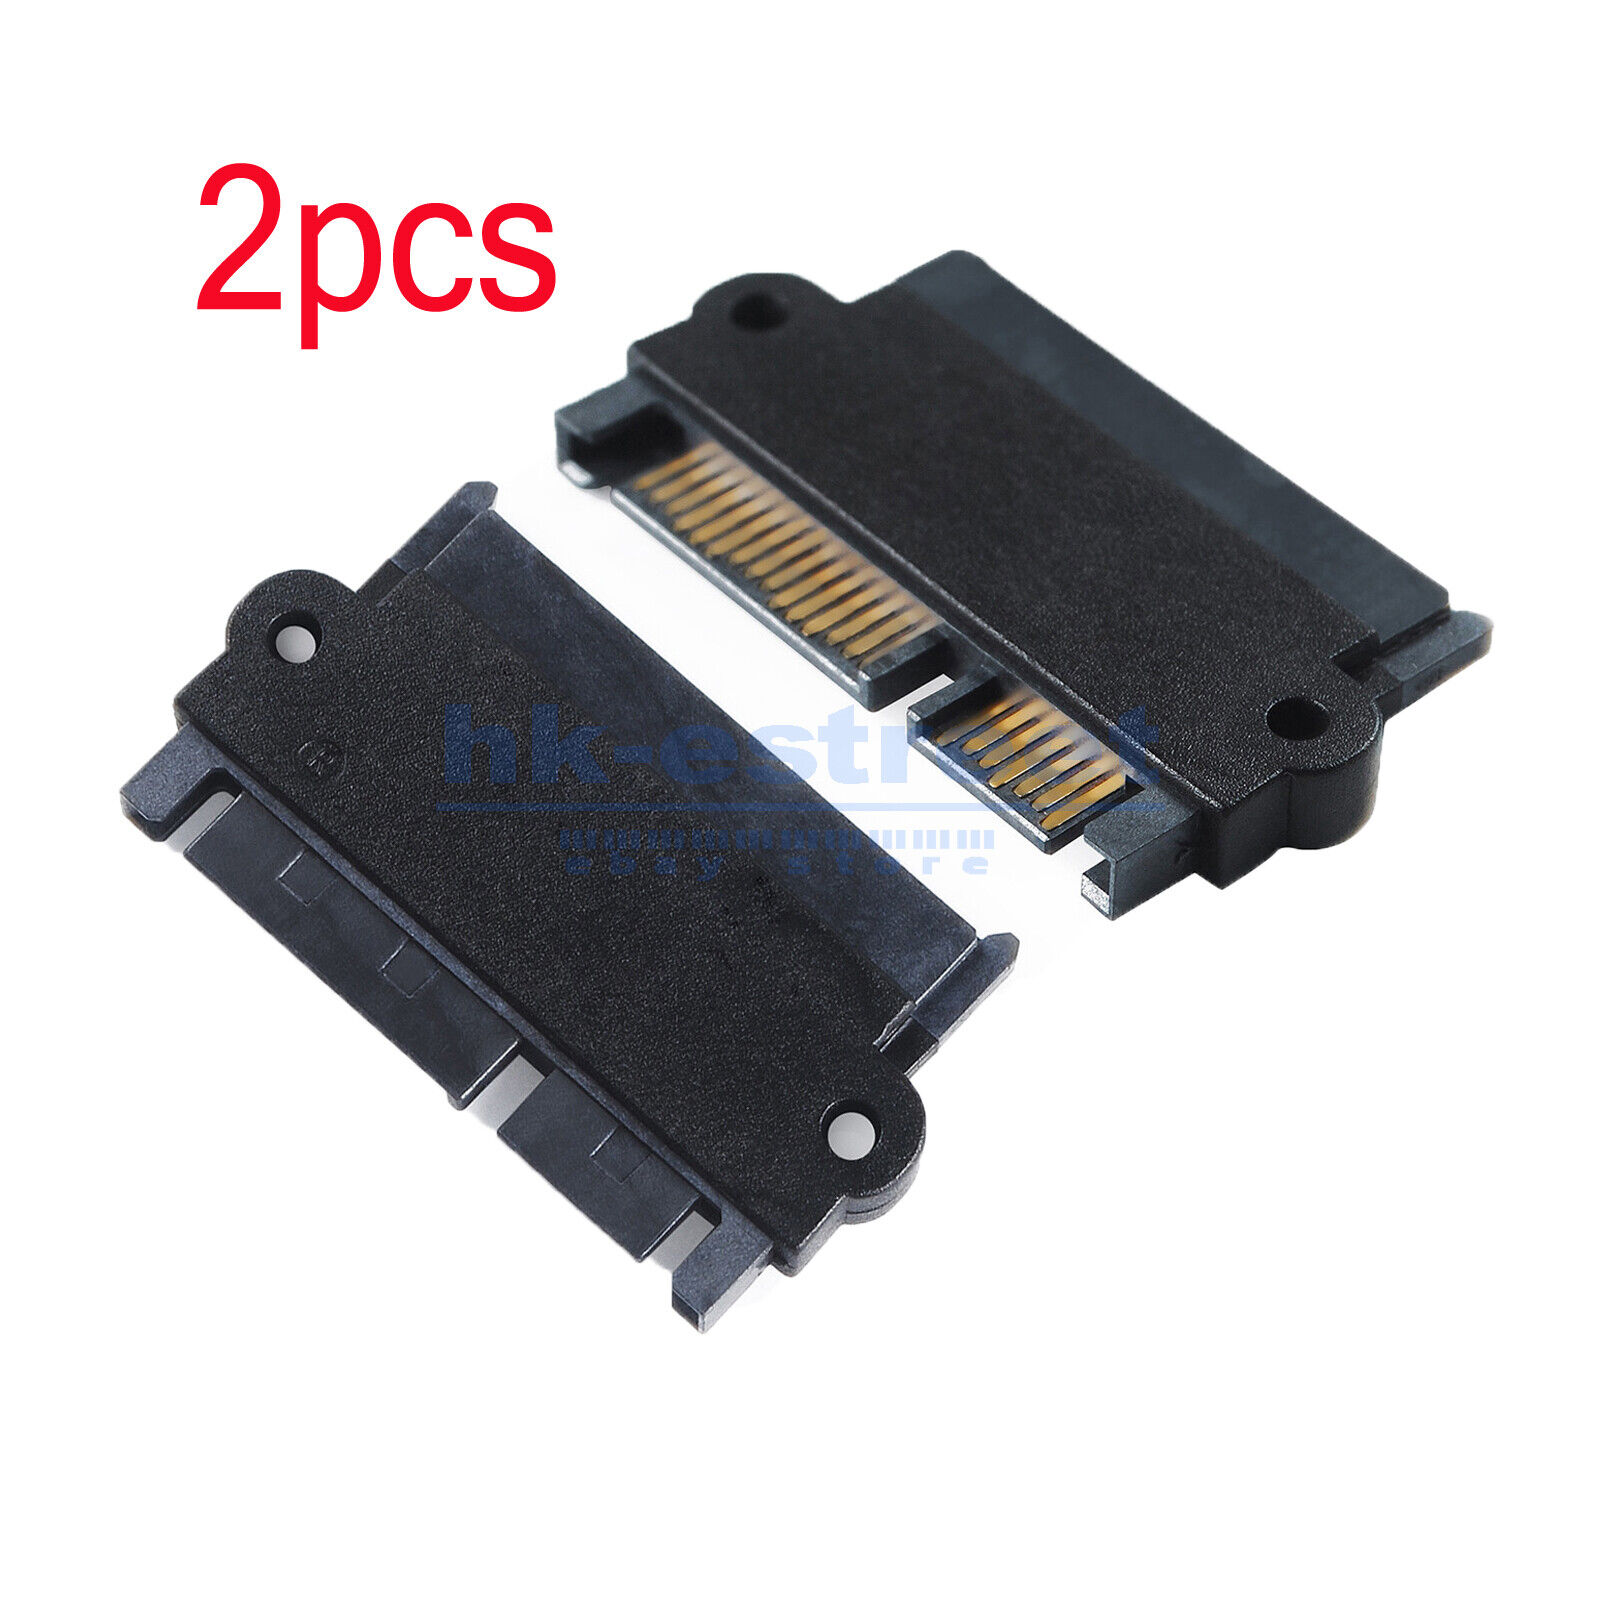 2pcs SATA 7+15 Pin 22 Pin Male to 22 Pin Female Right Angle Convertor Adapter